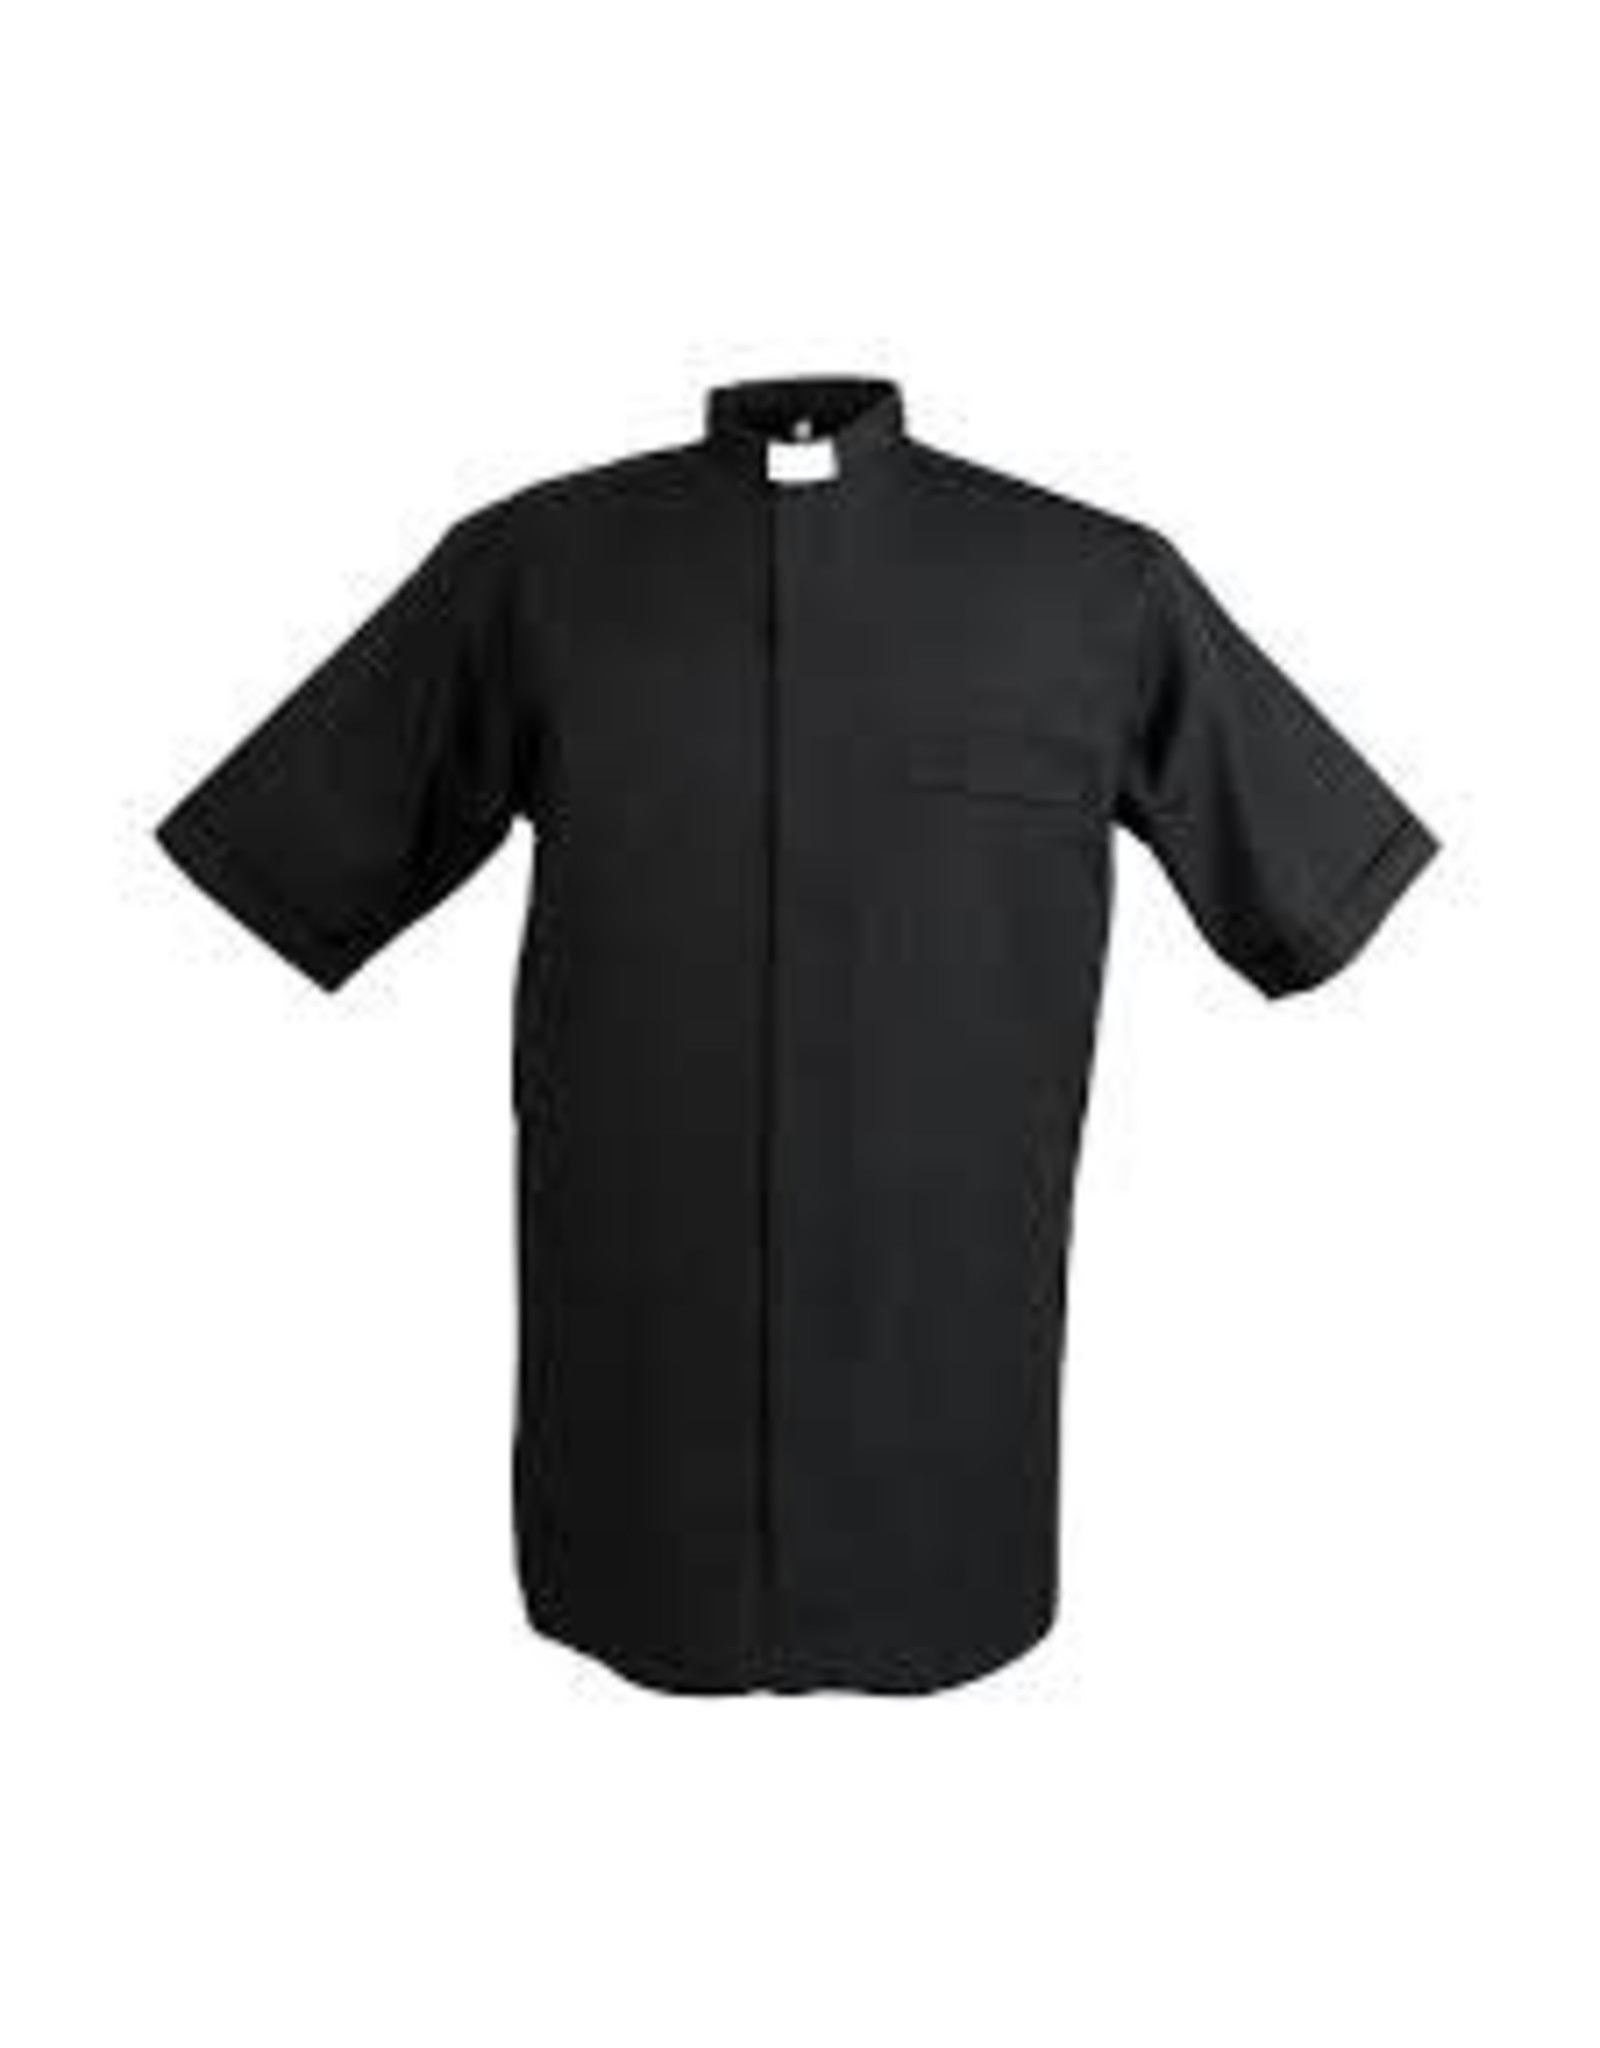 Clergy Shirt S7441 - Tab Collar - Short Sleeve - Size